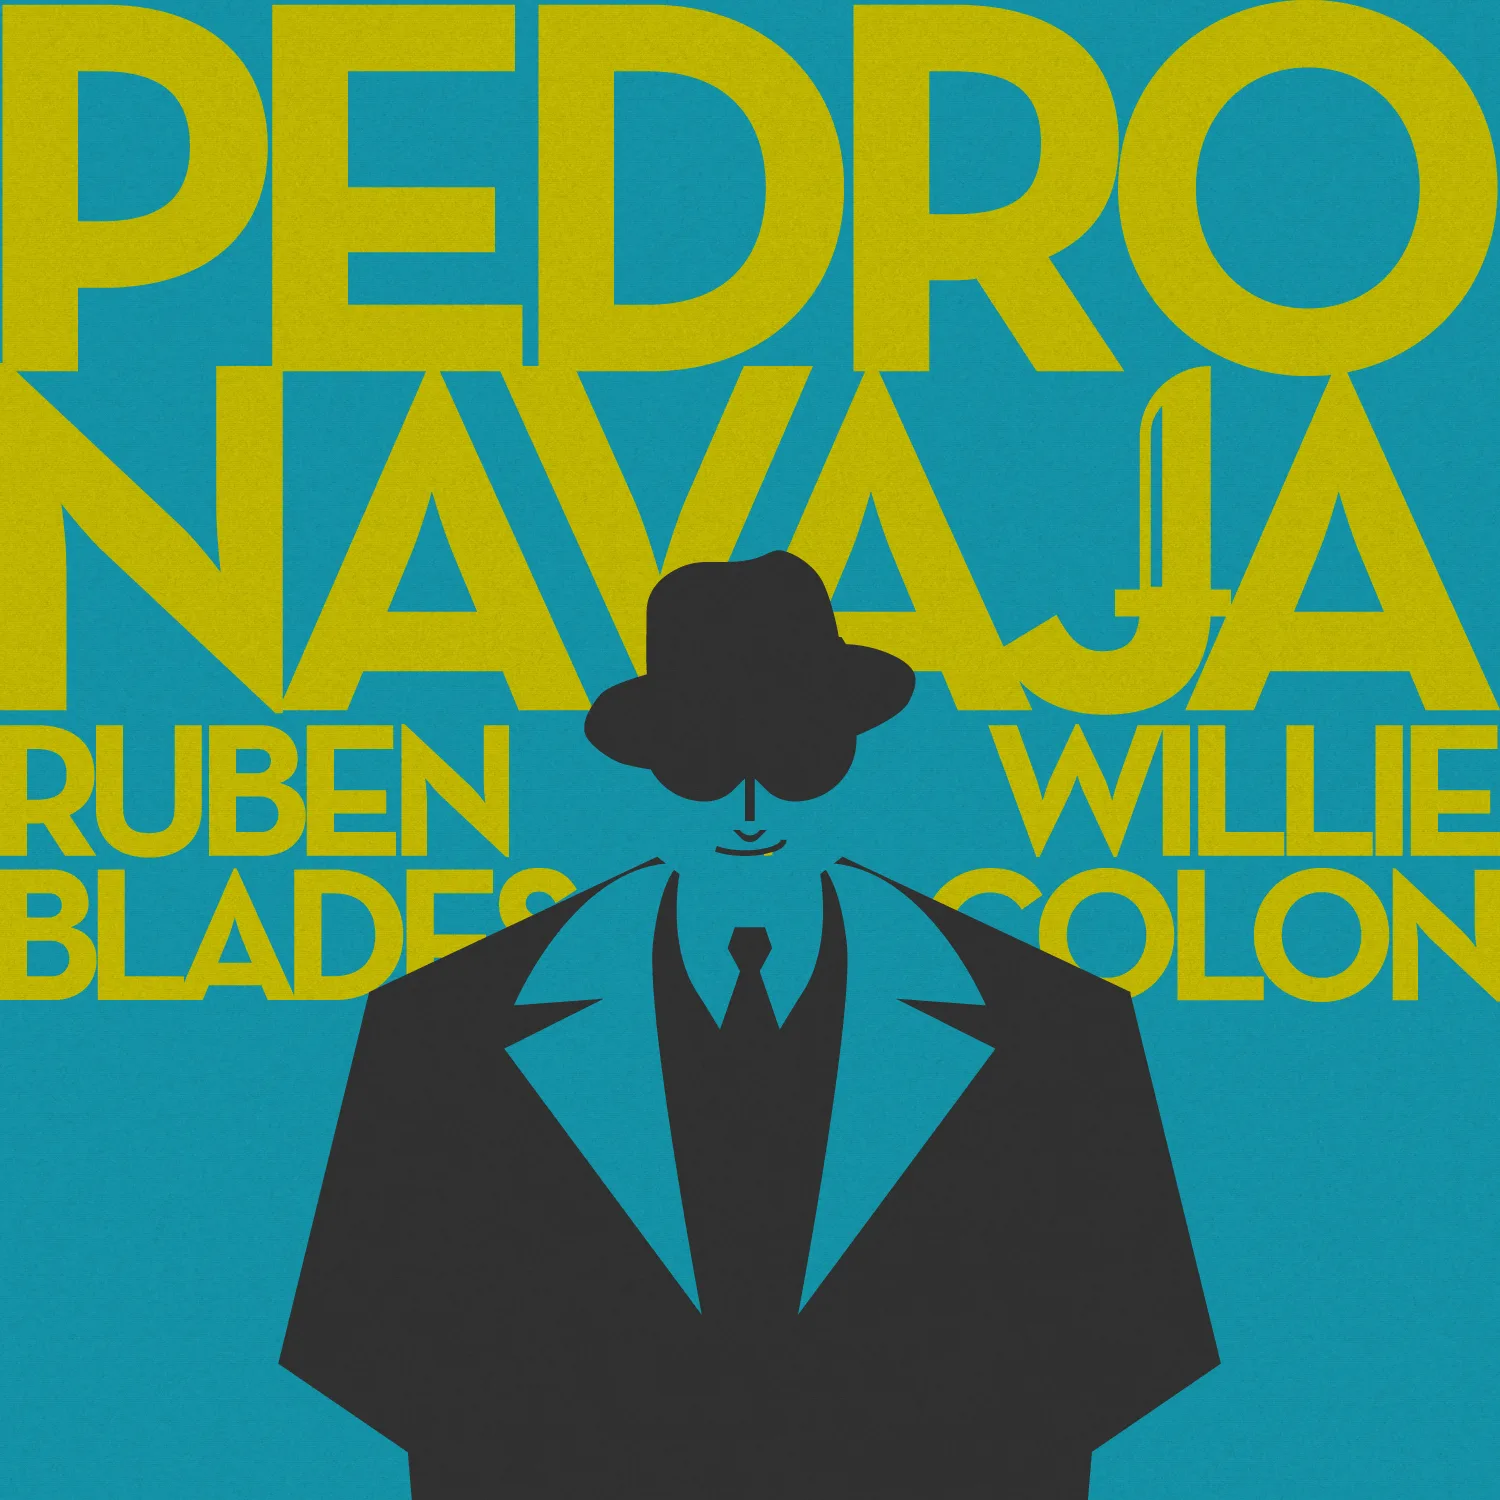 Pedro Navaja Inspired Illustration